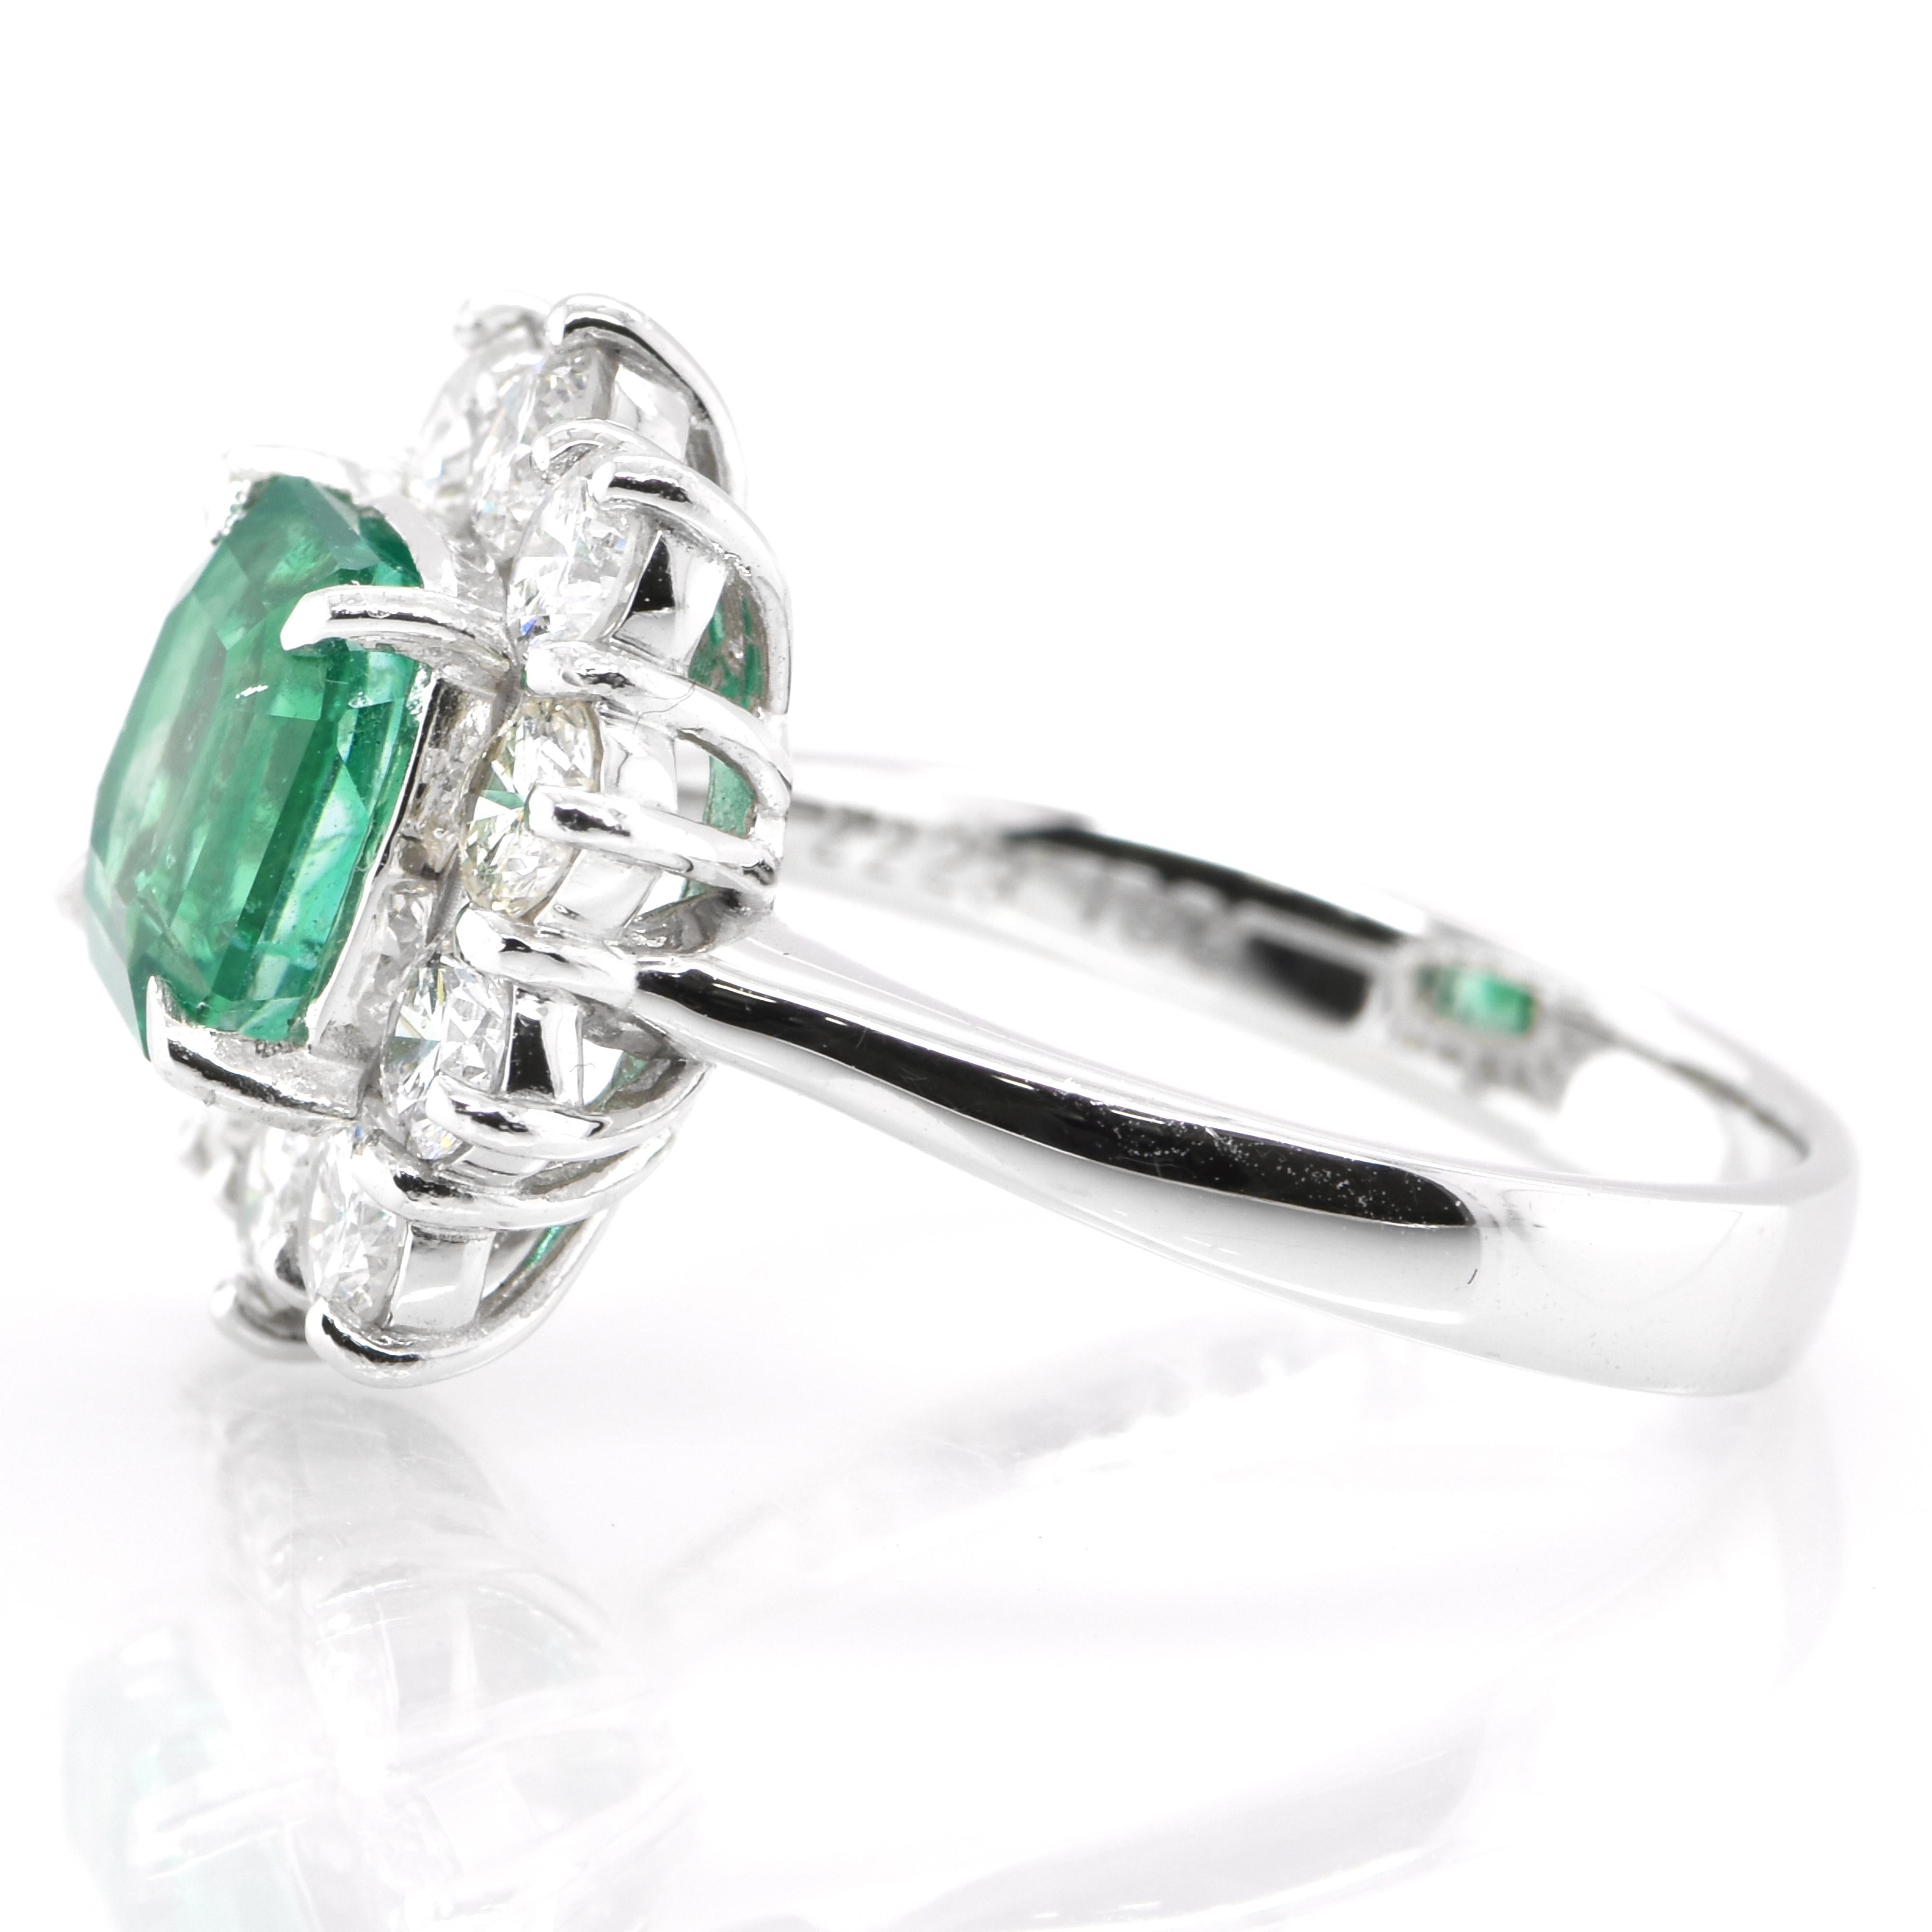 Emerald Cut GIA Certified 2.22 Carat Natural Colombian Emerald Ring Set in Platinum